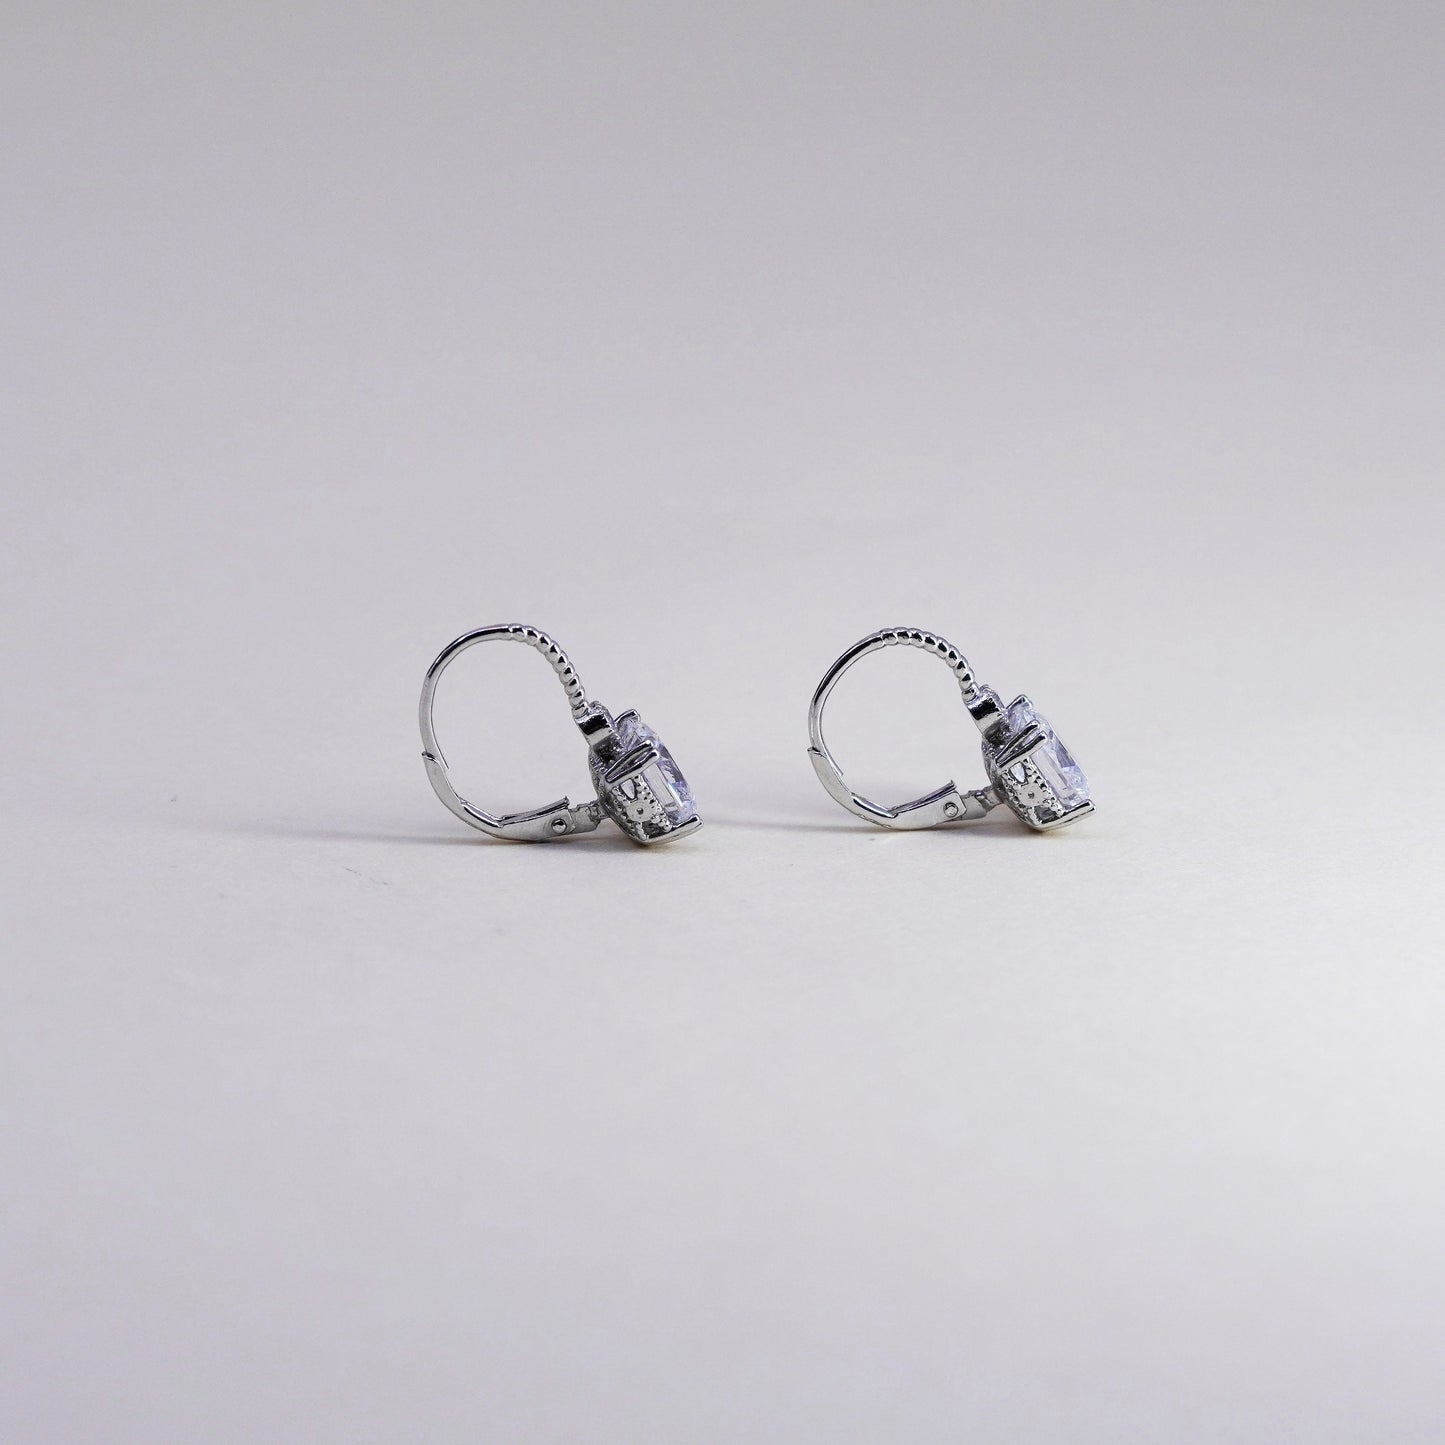 Vintage Sterling 925 silver handmade earrings, square Cz dangles